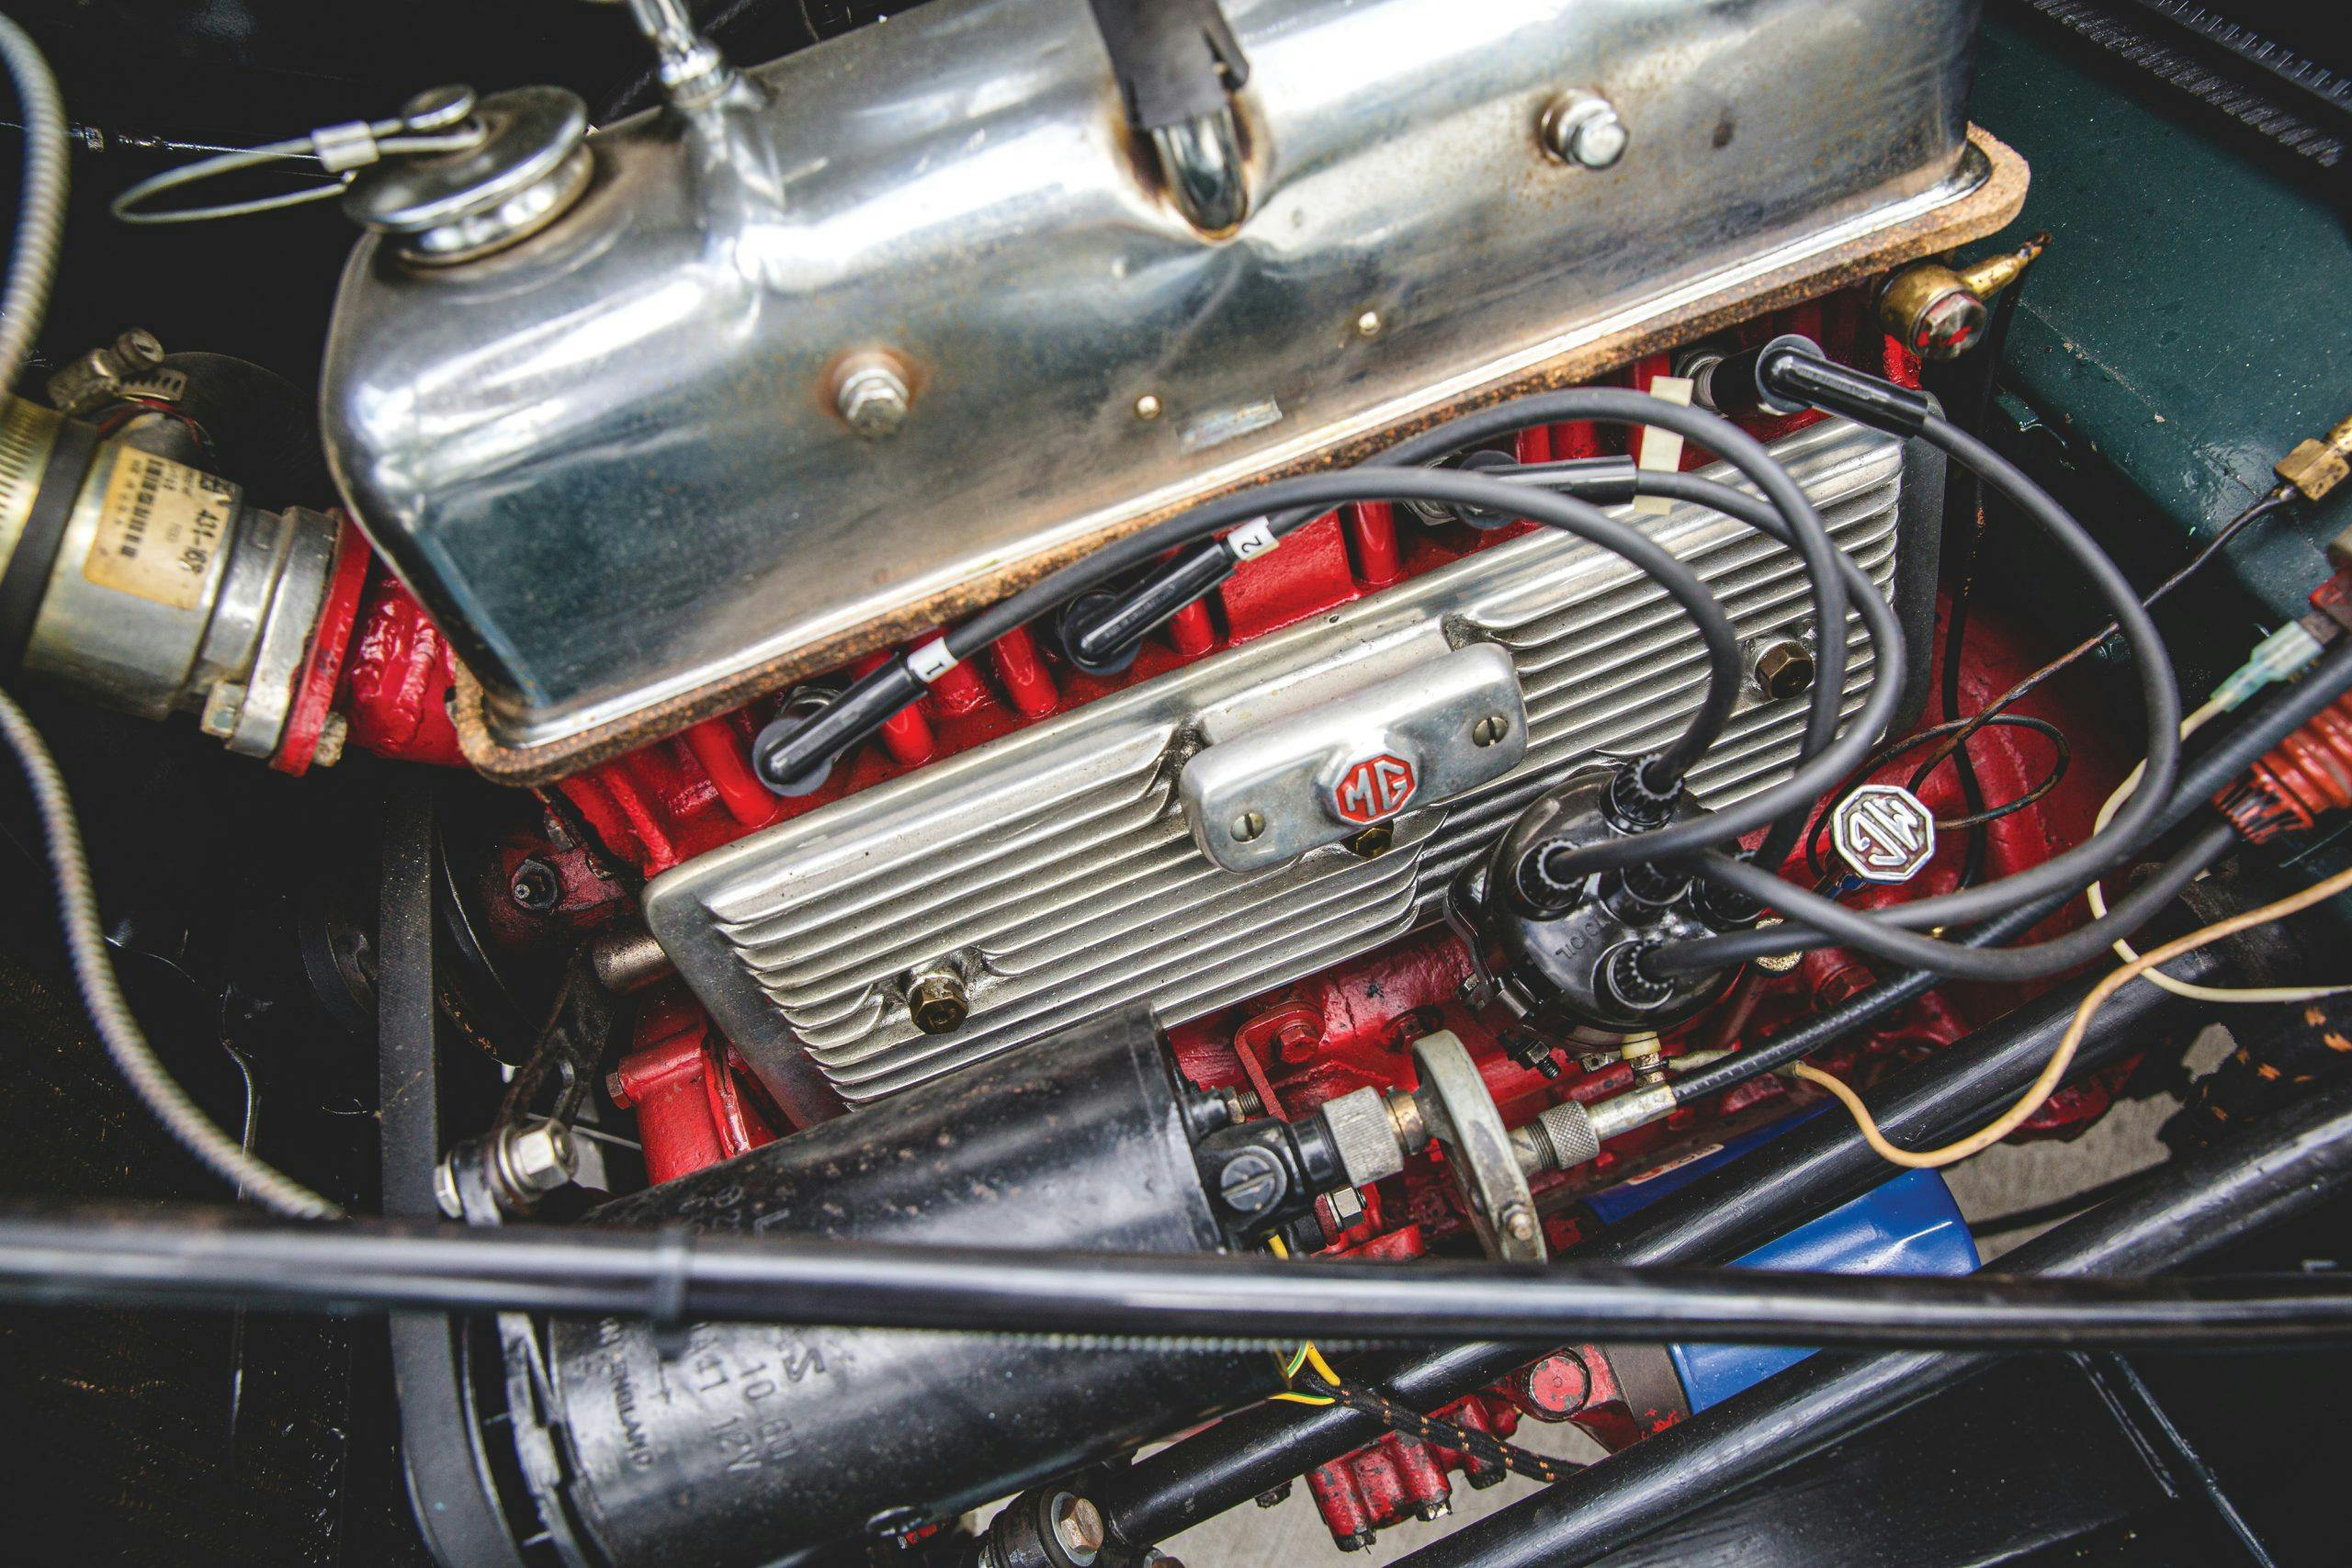 1952 MG TD engine